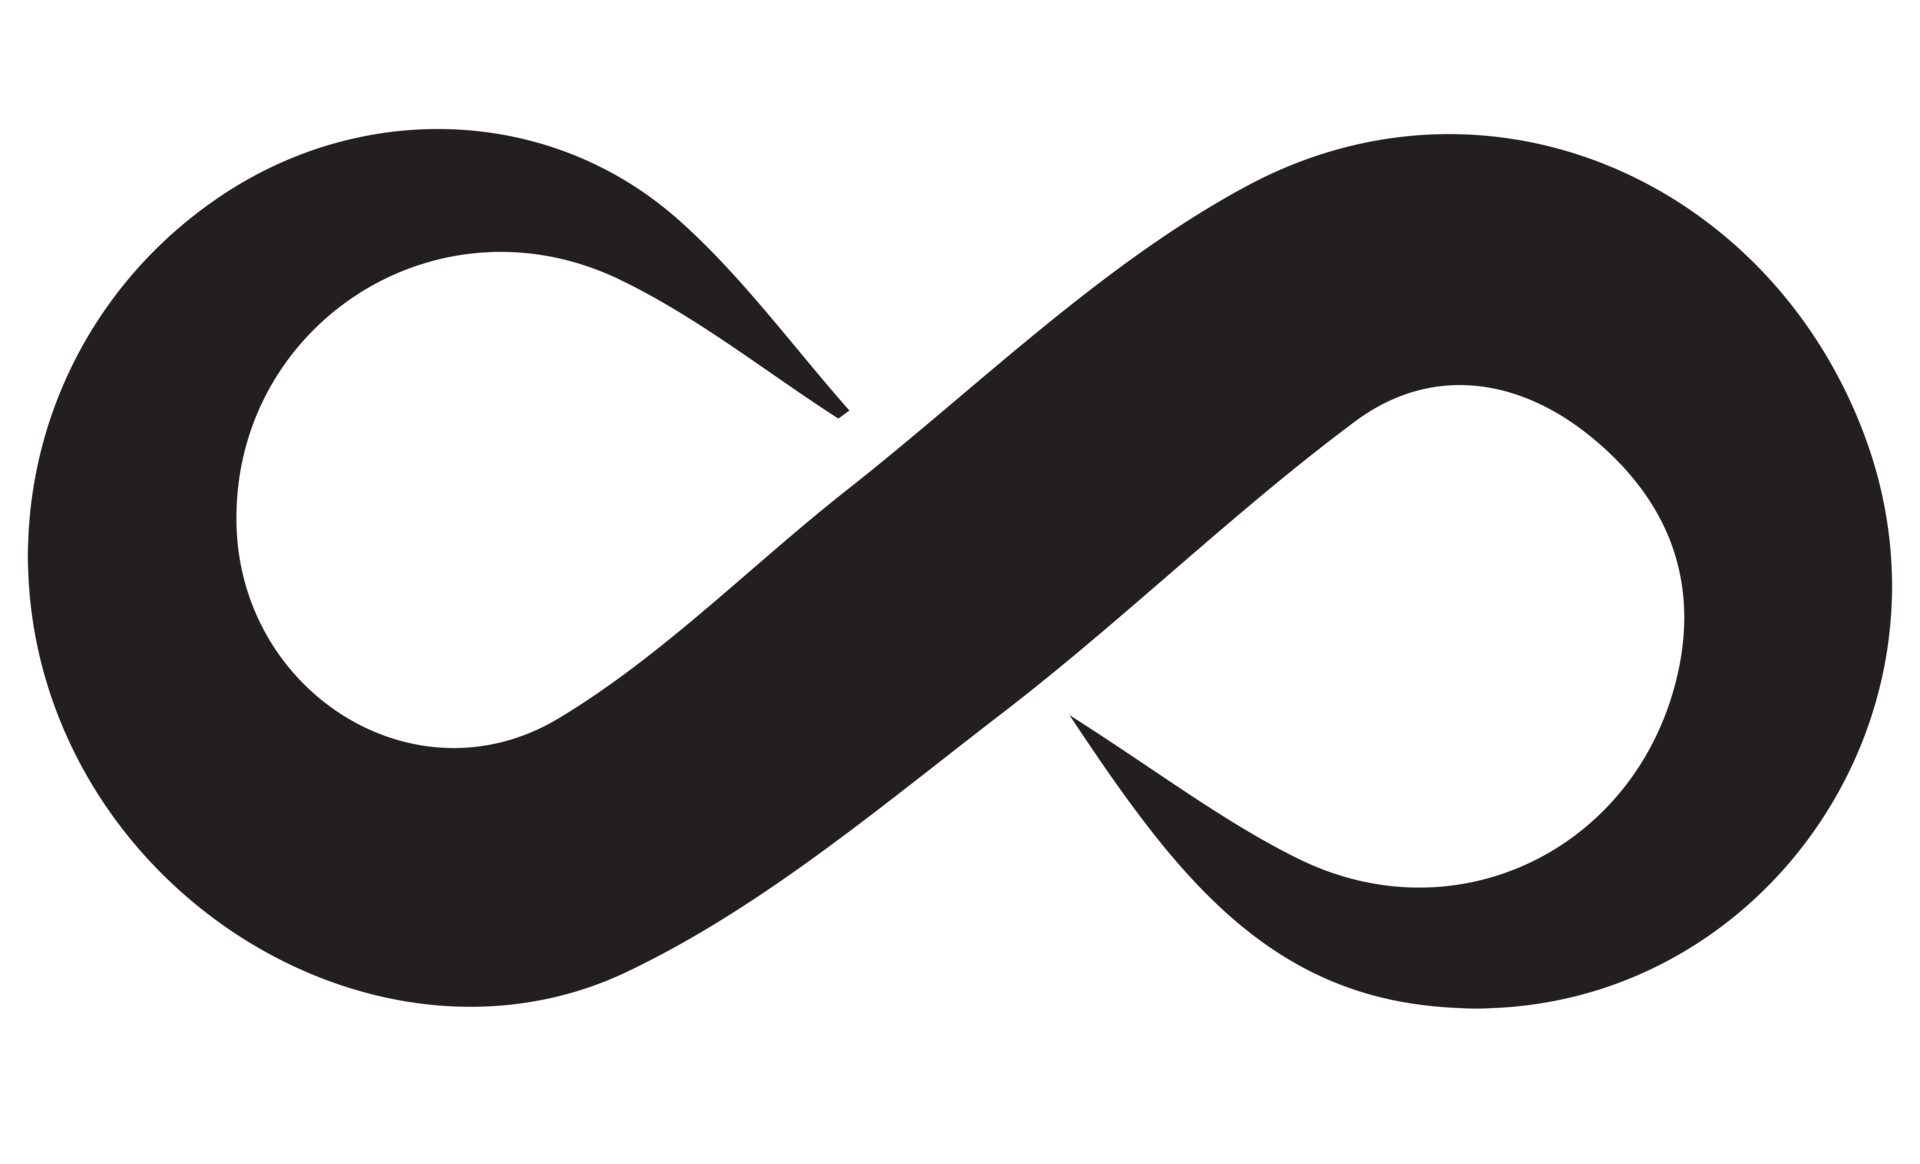 infinity symbol black on transparent background PNG 19787089 PNG